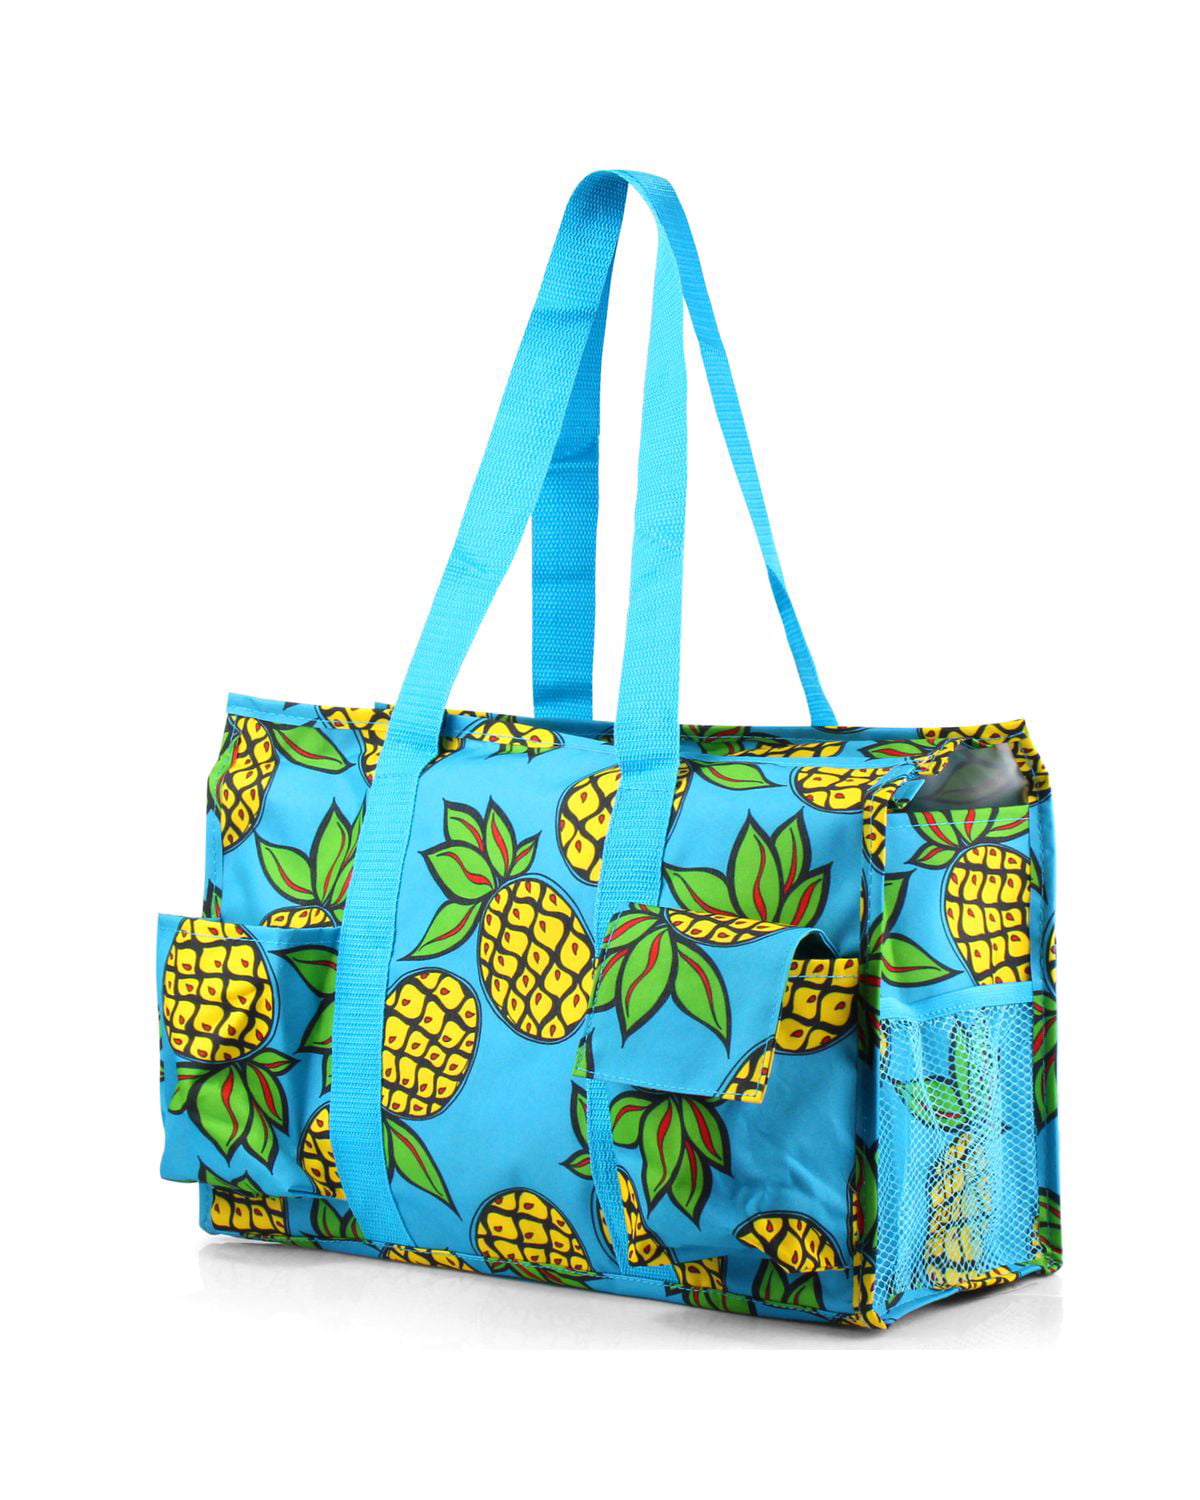 Pineapple Tote Bag Women Tote Beach Bag Travel Handbag Shoulder Bag Shopping Bag with Rope Handles for Women Girls Travel Daily Beach